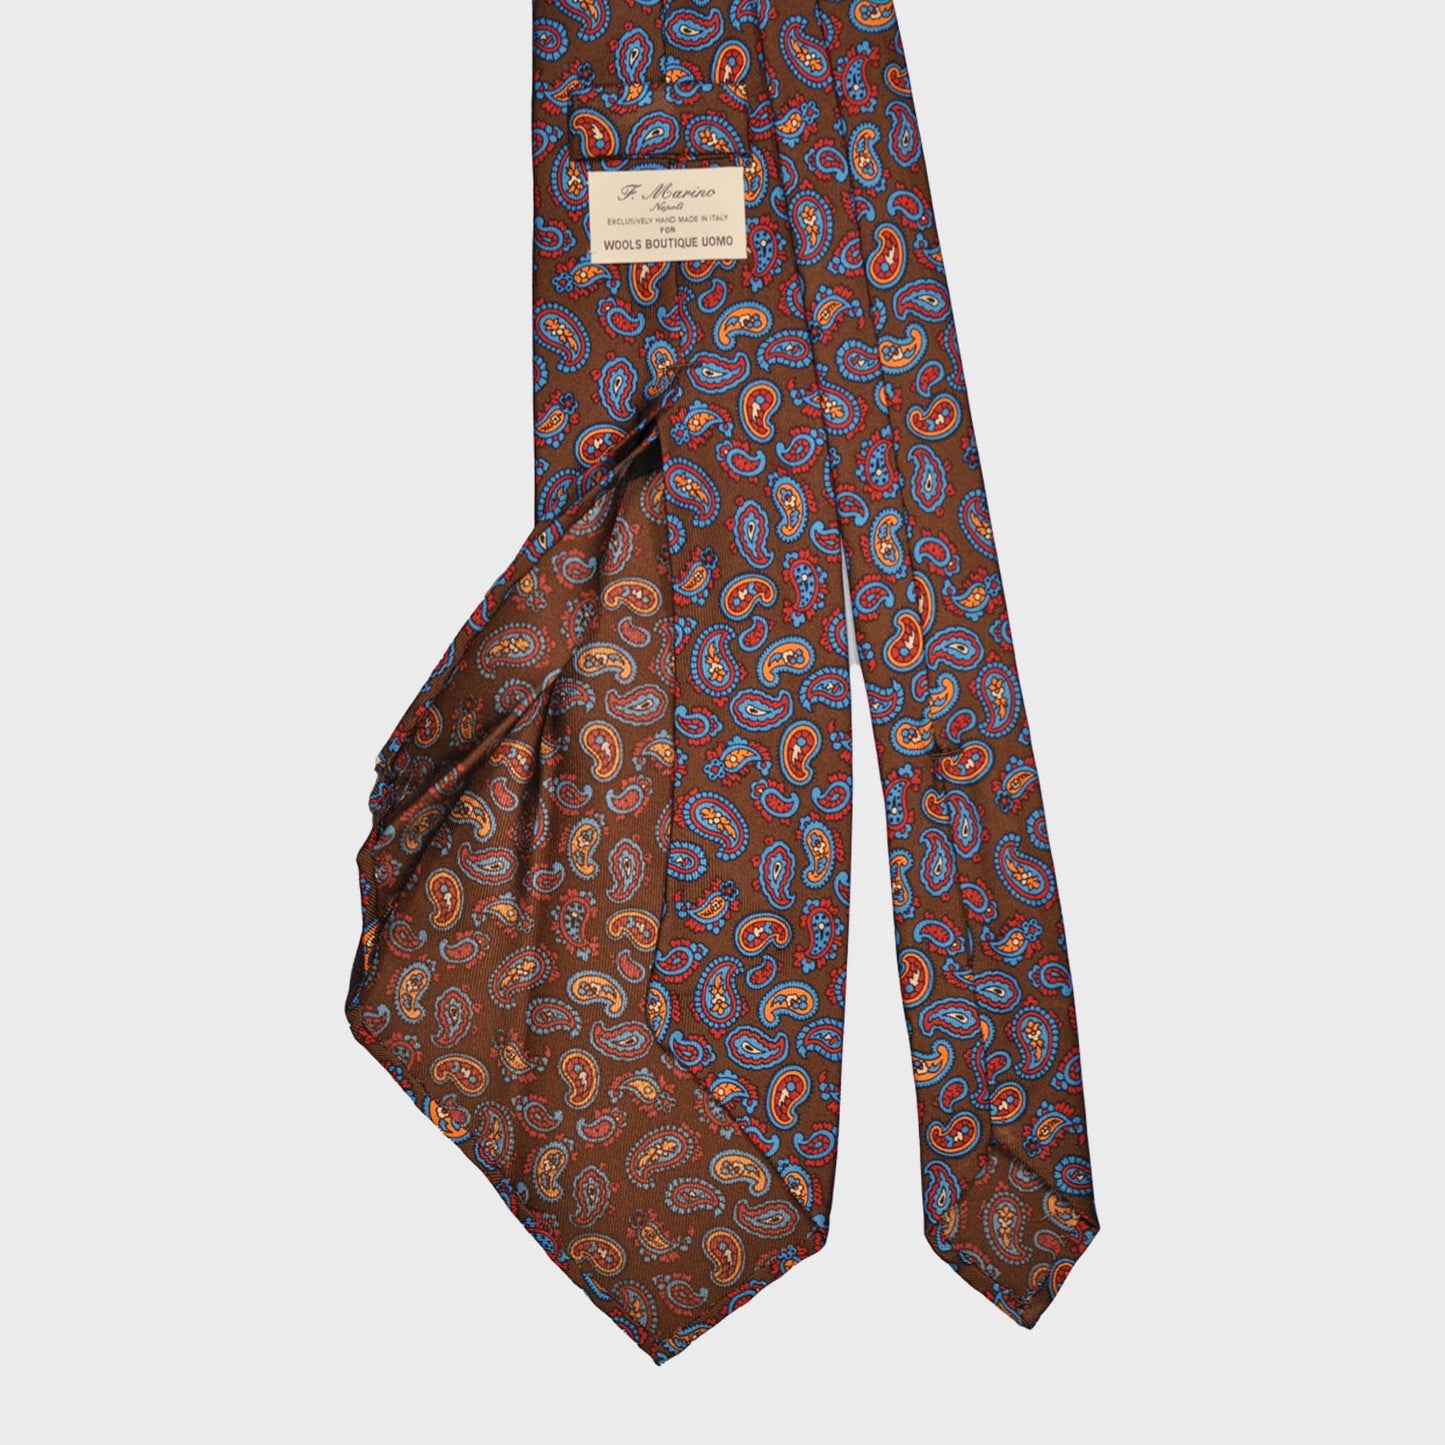 F.Marino Silk Tie 7 Folds Paisley Coffee Brown-Wools Boutique Uomo